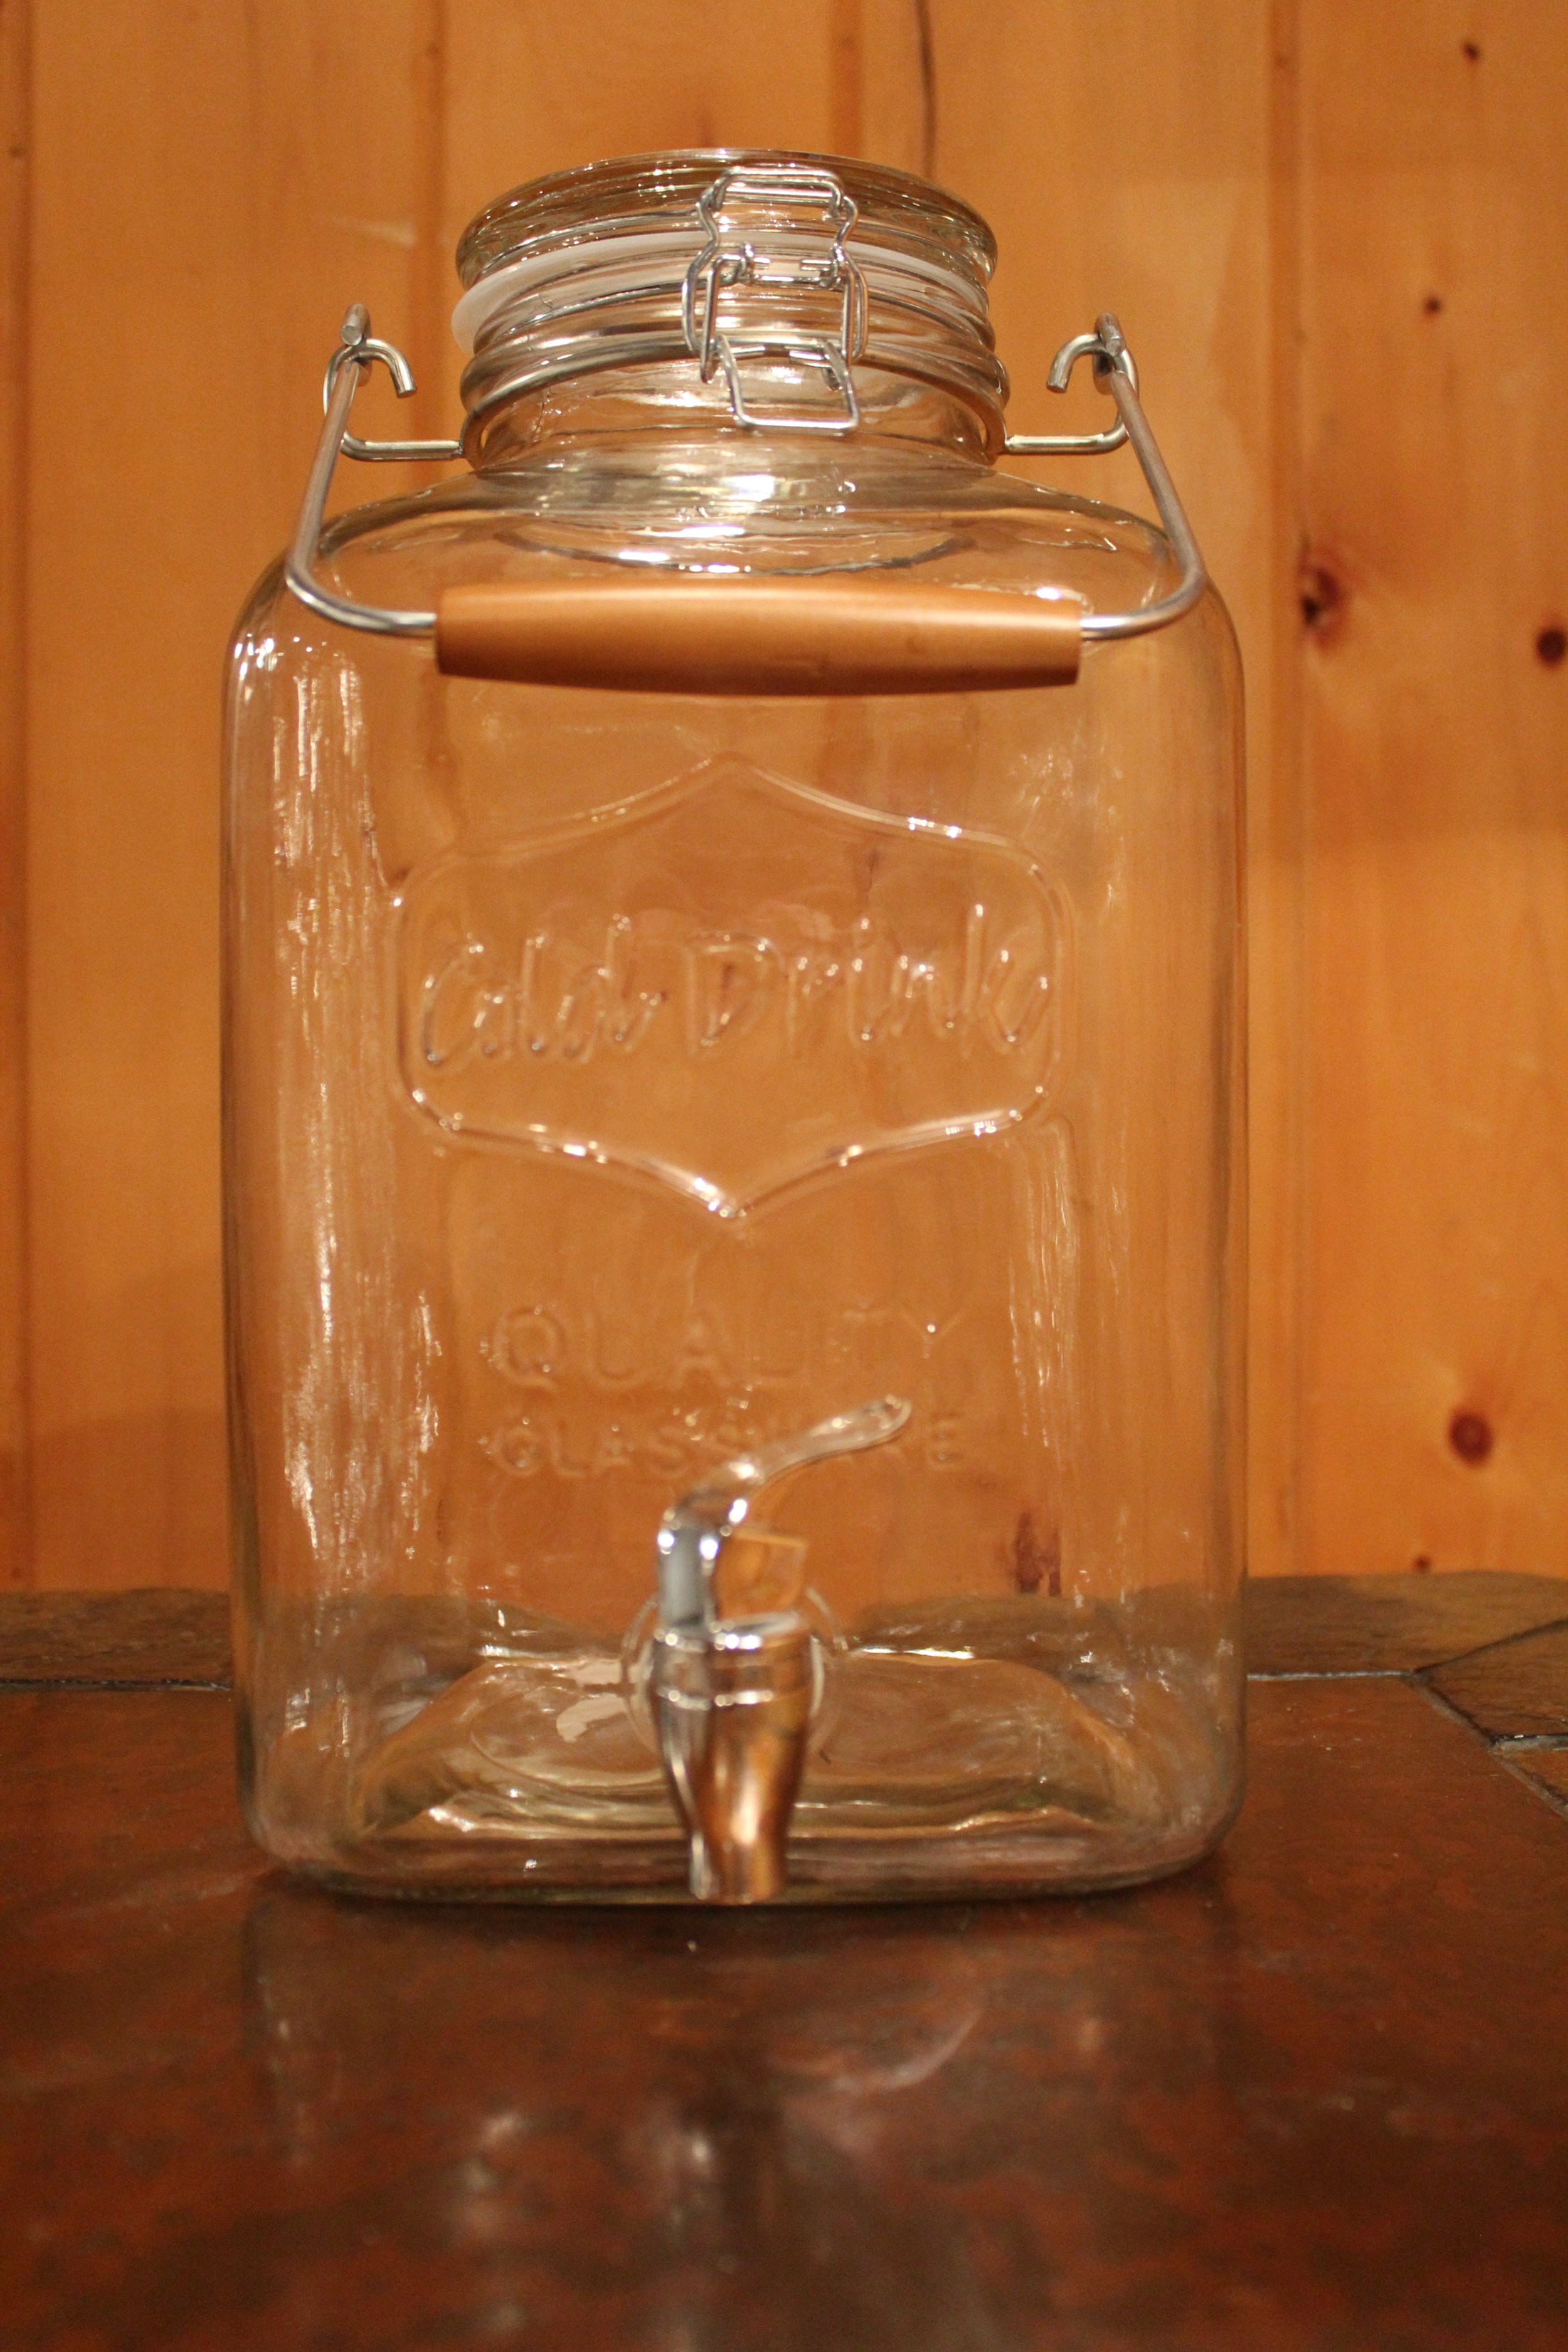 2 count Mason jar beverage dispenser 2 gallon — Paradise Ranch